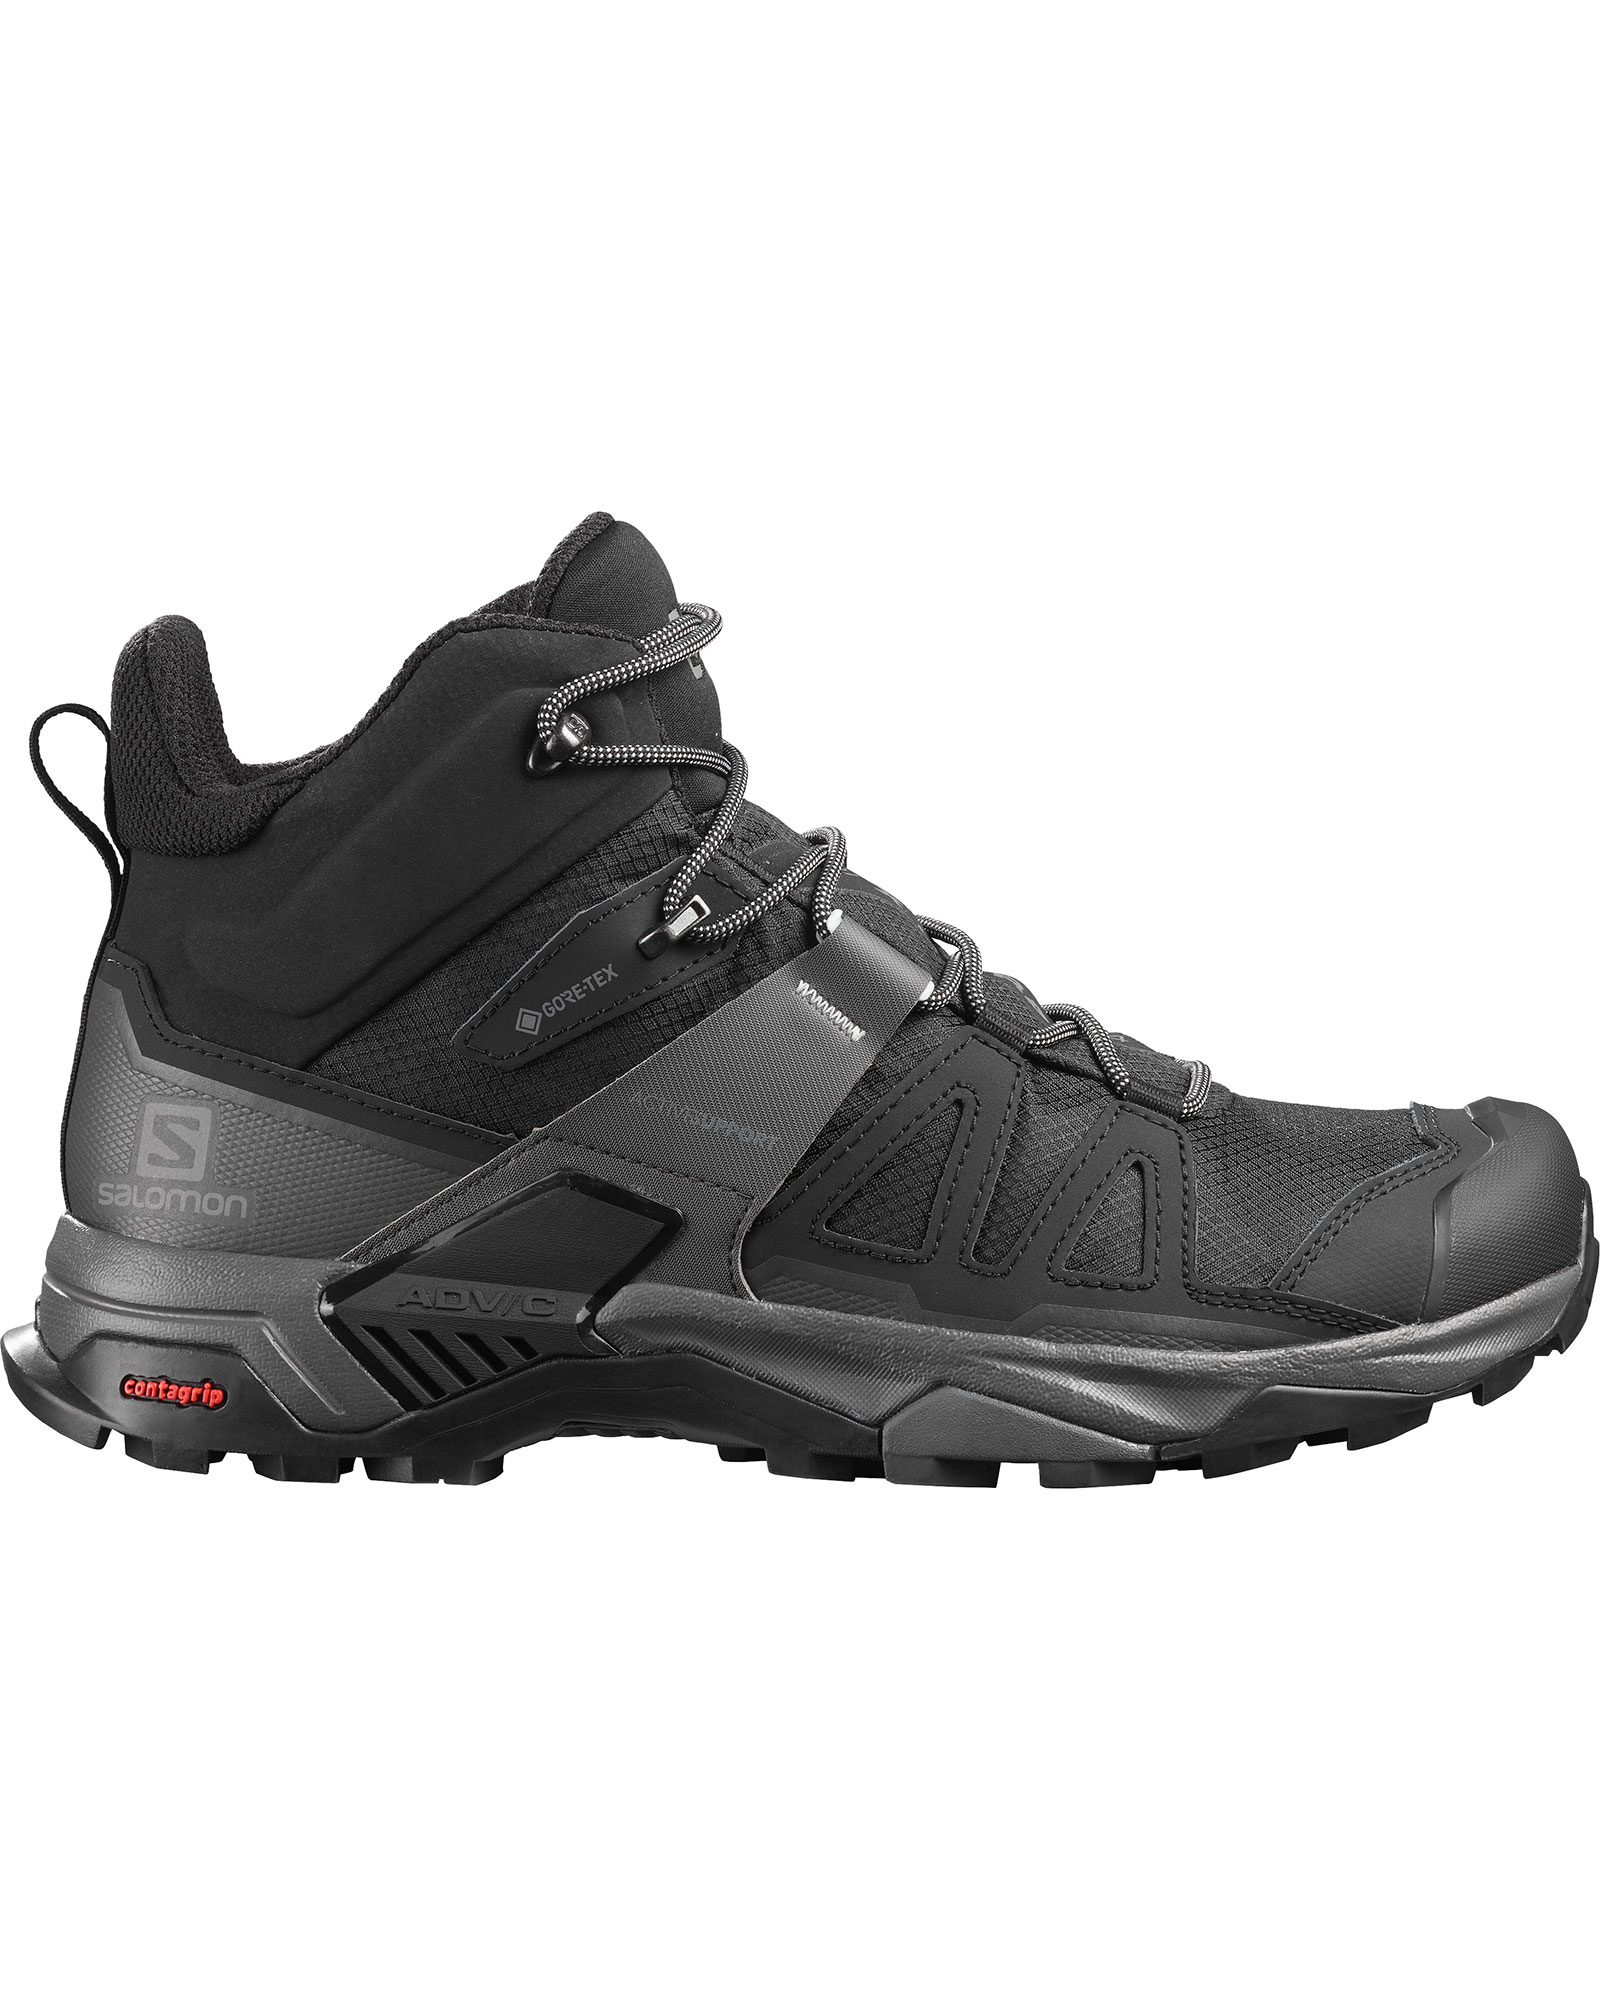 Salomon X Ultra 4 Mid GORE TEX Men’s Boots - Black/Magnet/Pearl Blue UK 10